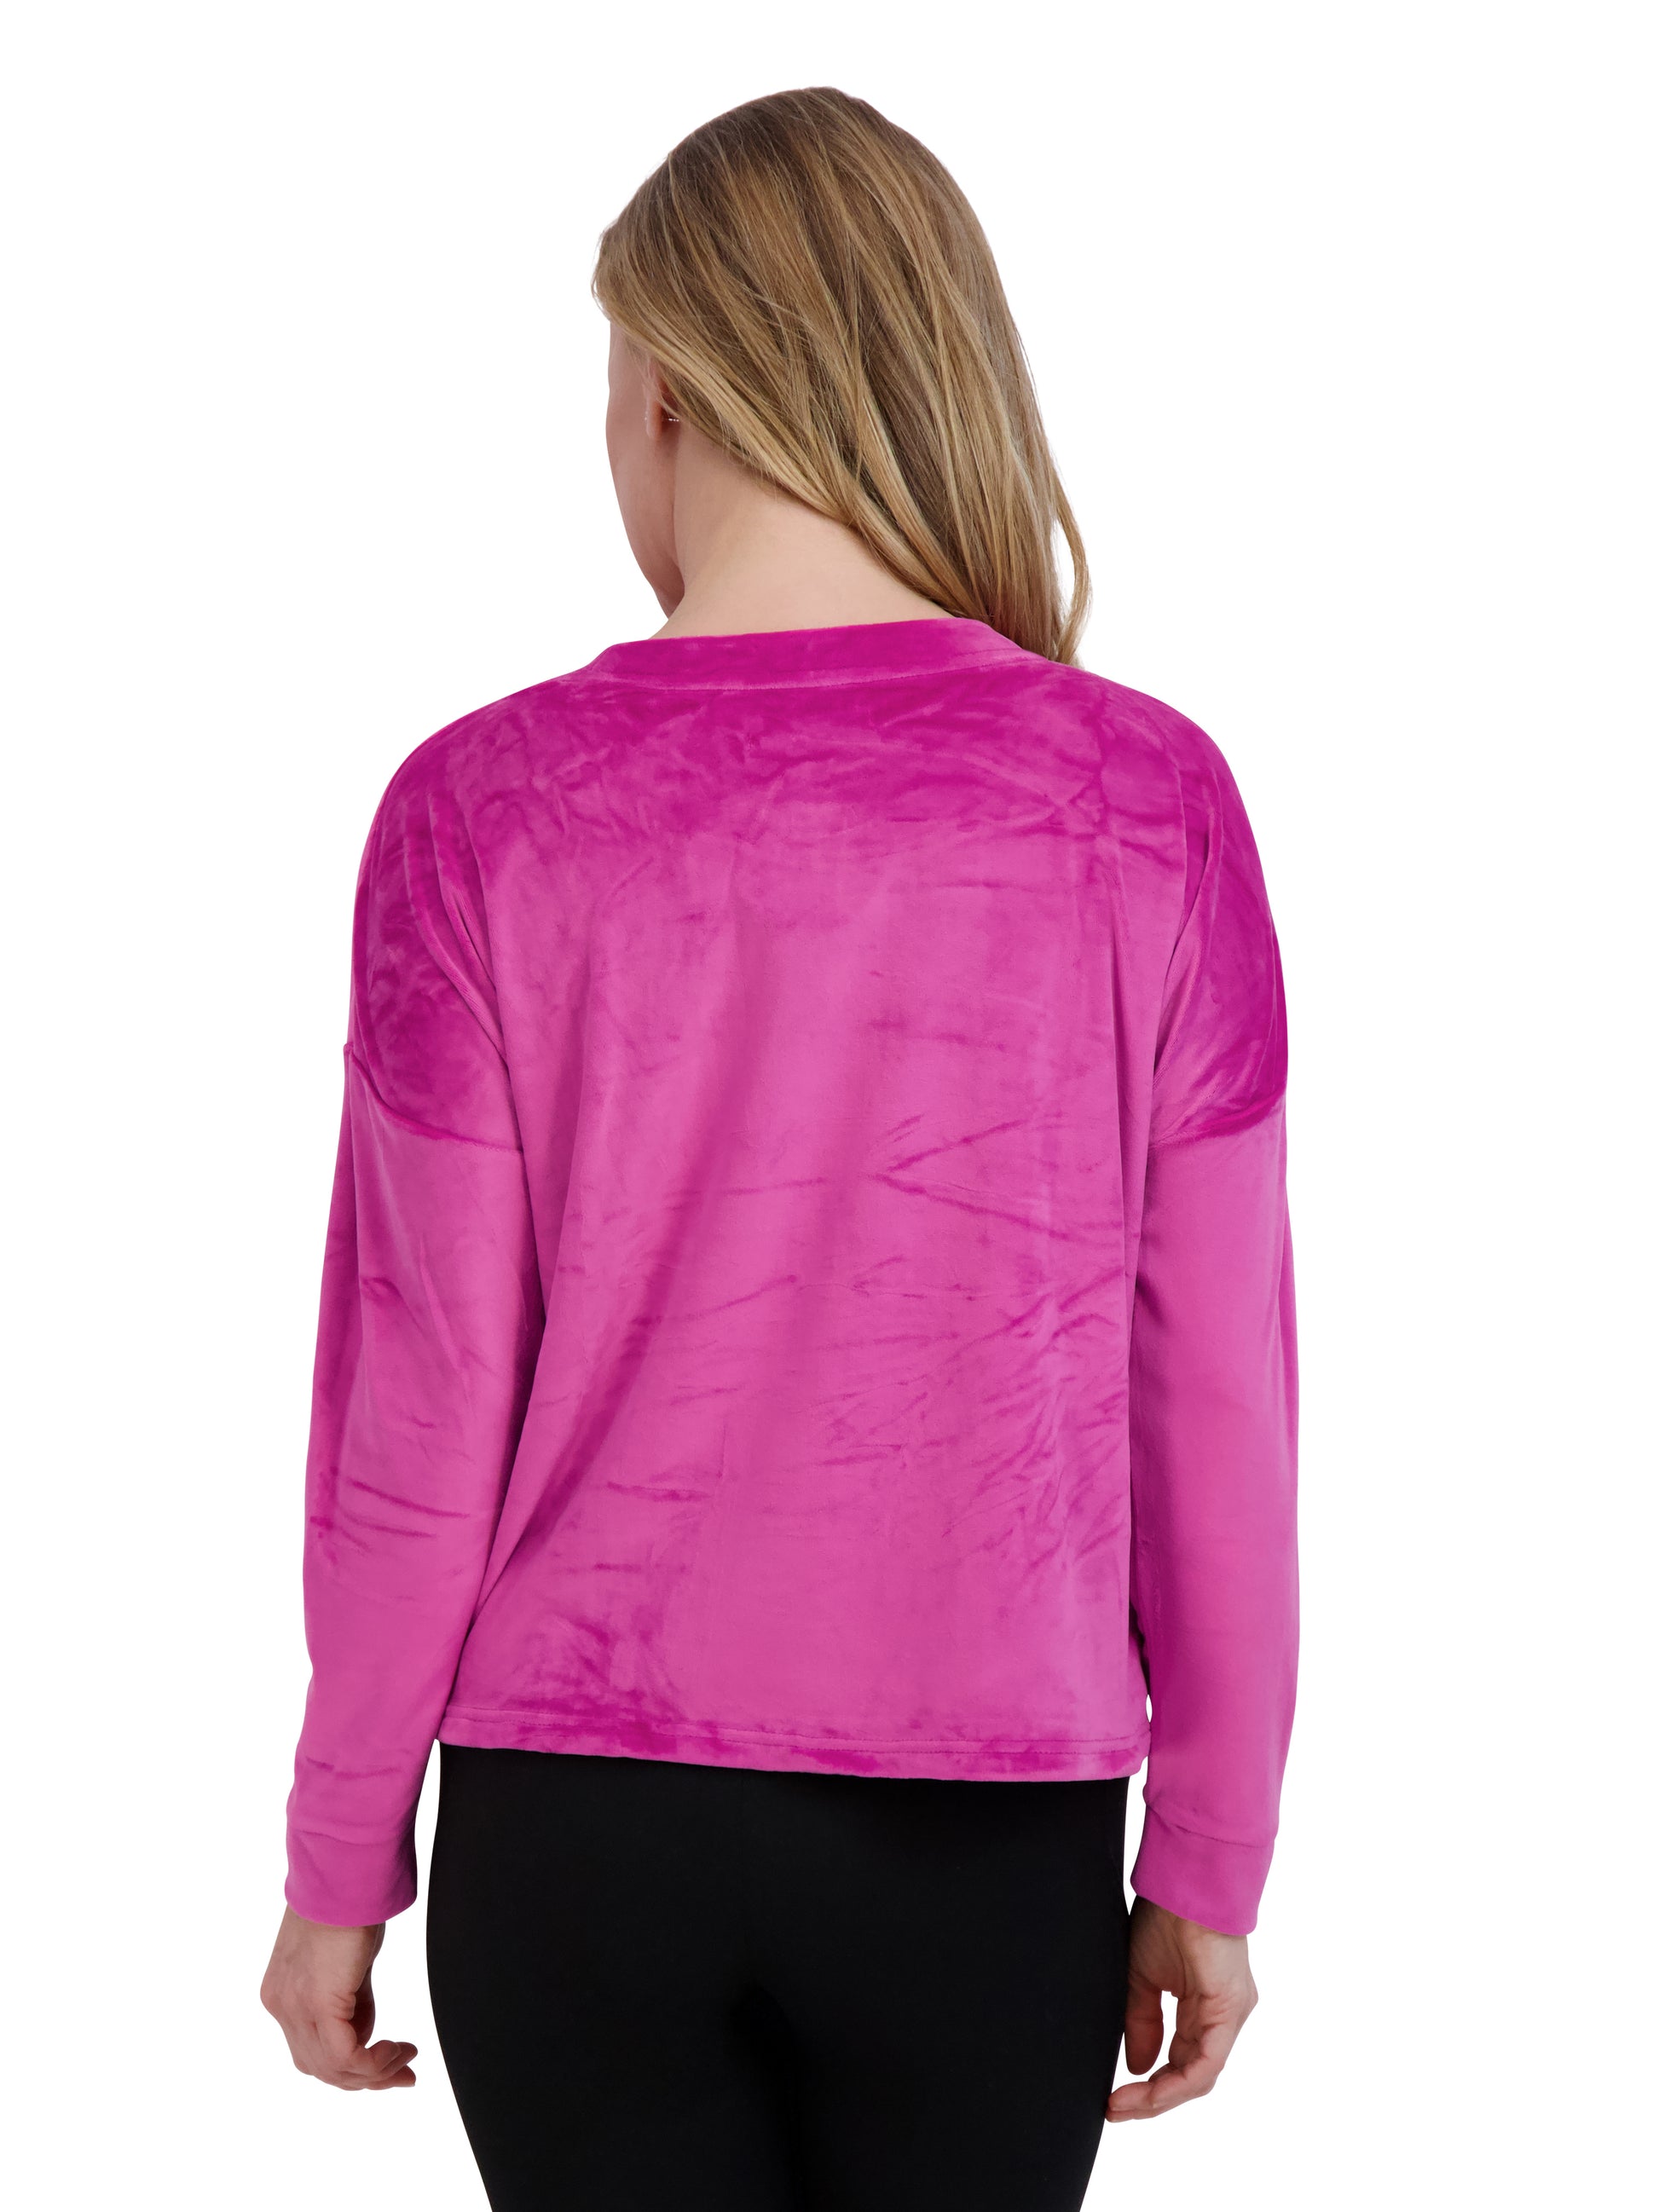 Women's "BE HAPPY" Pink Velour Drawstring Sweatshirt - Rae Dunn Wear - W Sweatshirt